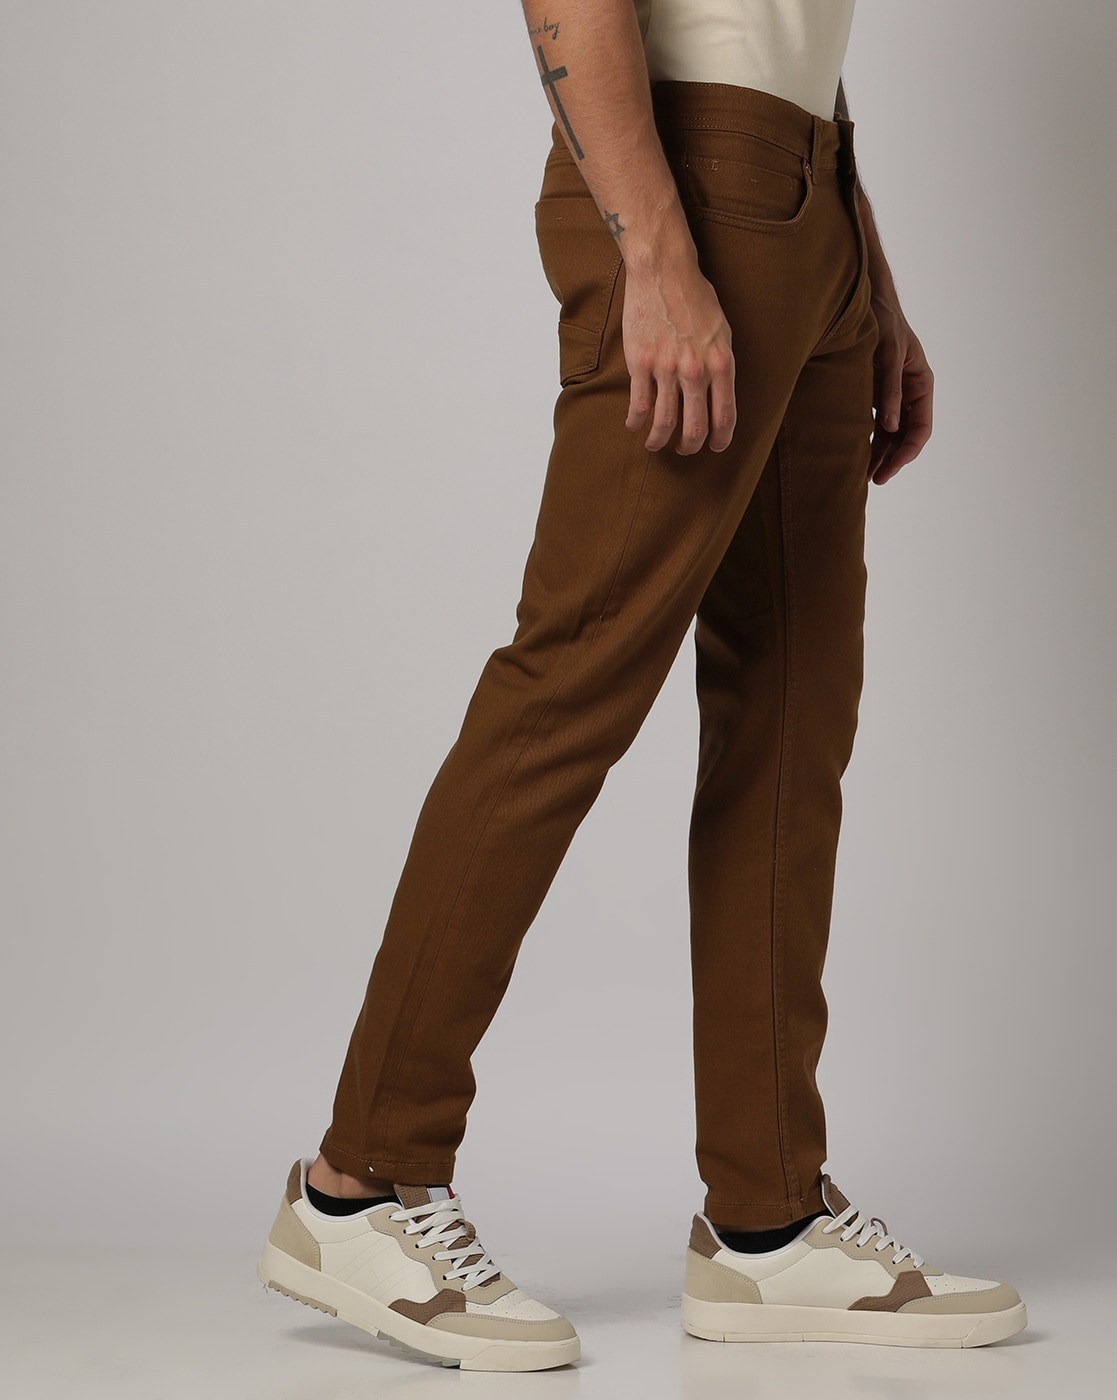 Buy Men Brown Skinny Fit Dark Wash Jeans Online - 780159 | Allen Solly-nttc.com.vn